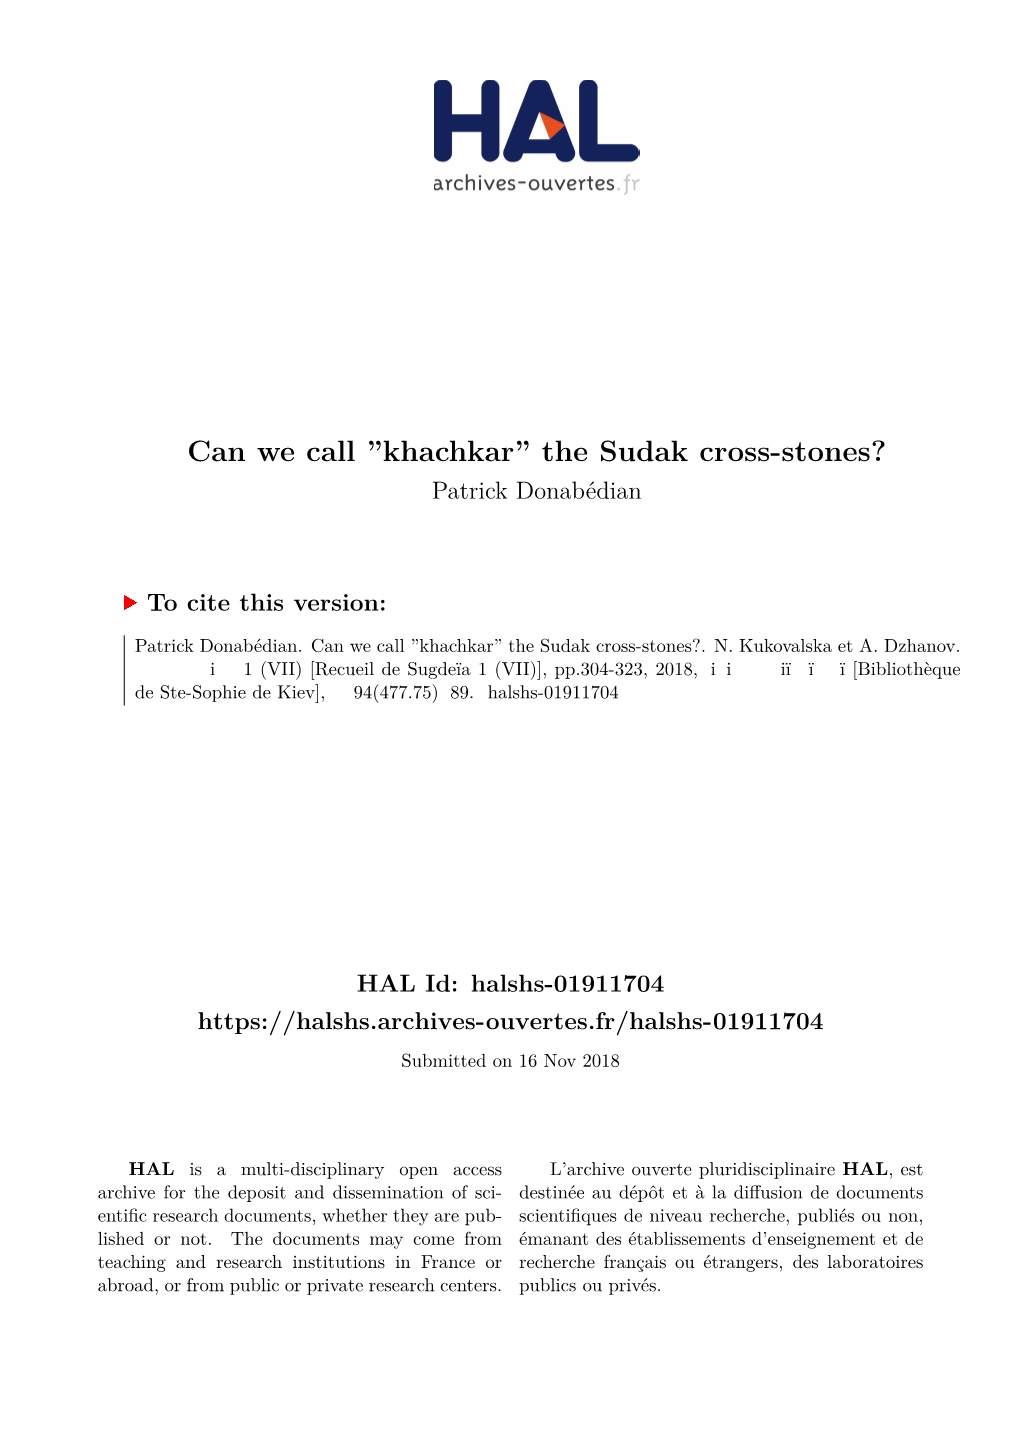 Khachkar” the Sudak Cross-Stones? Patrick Donabédian